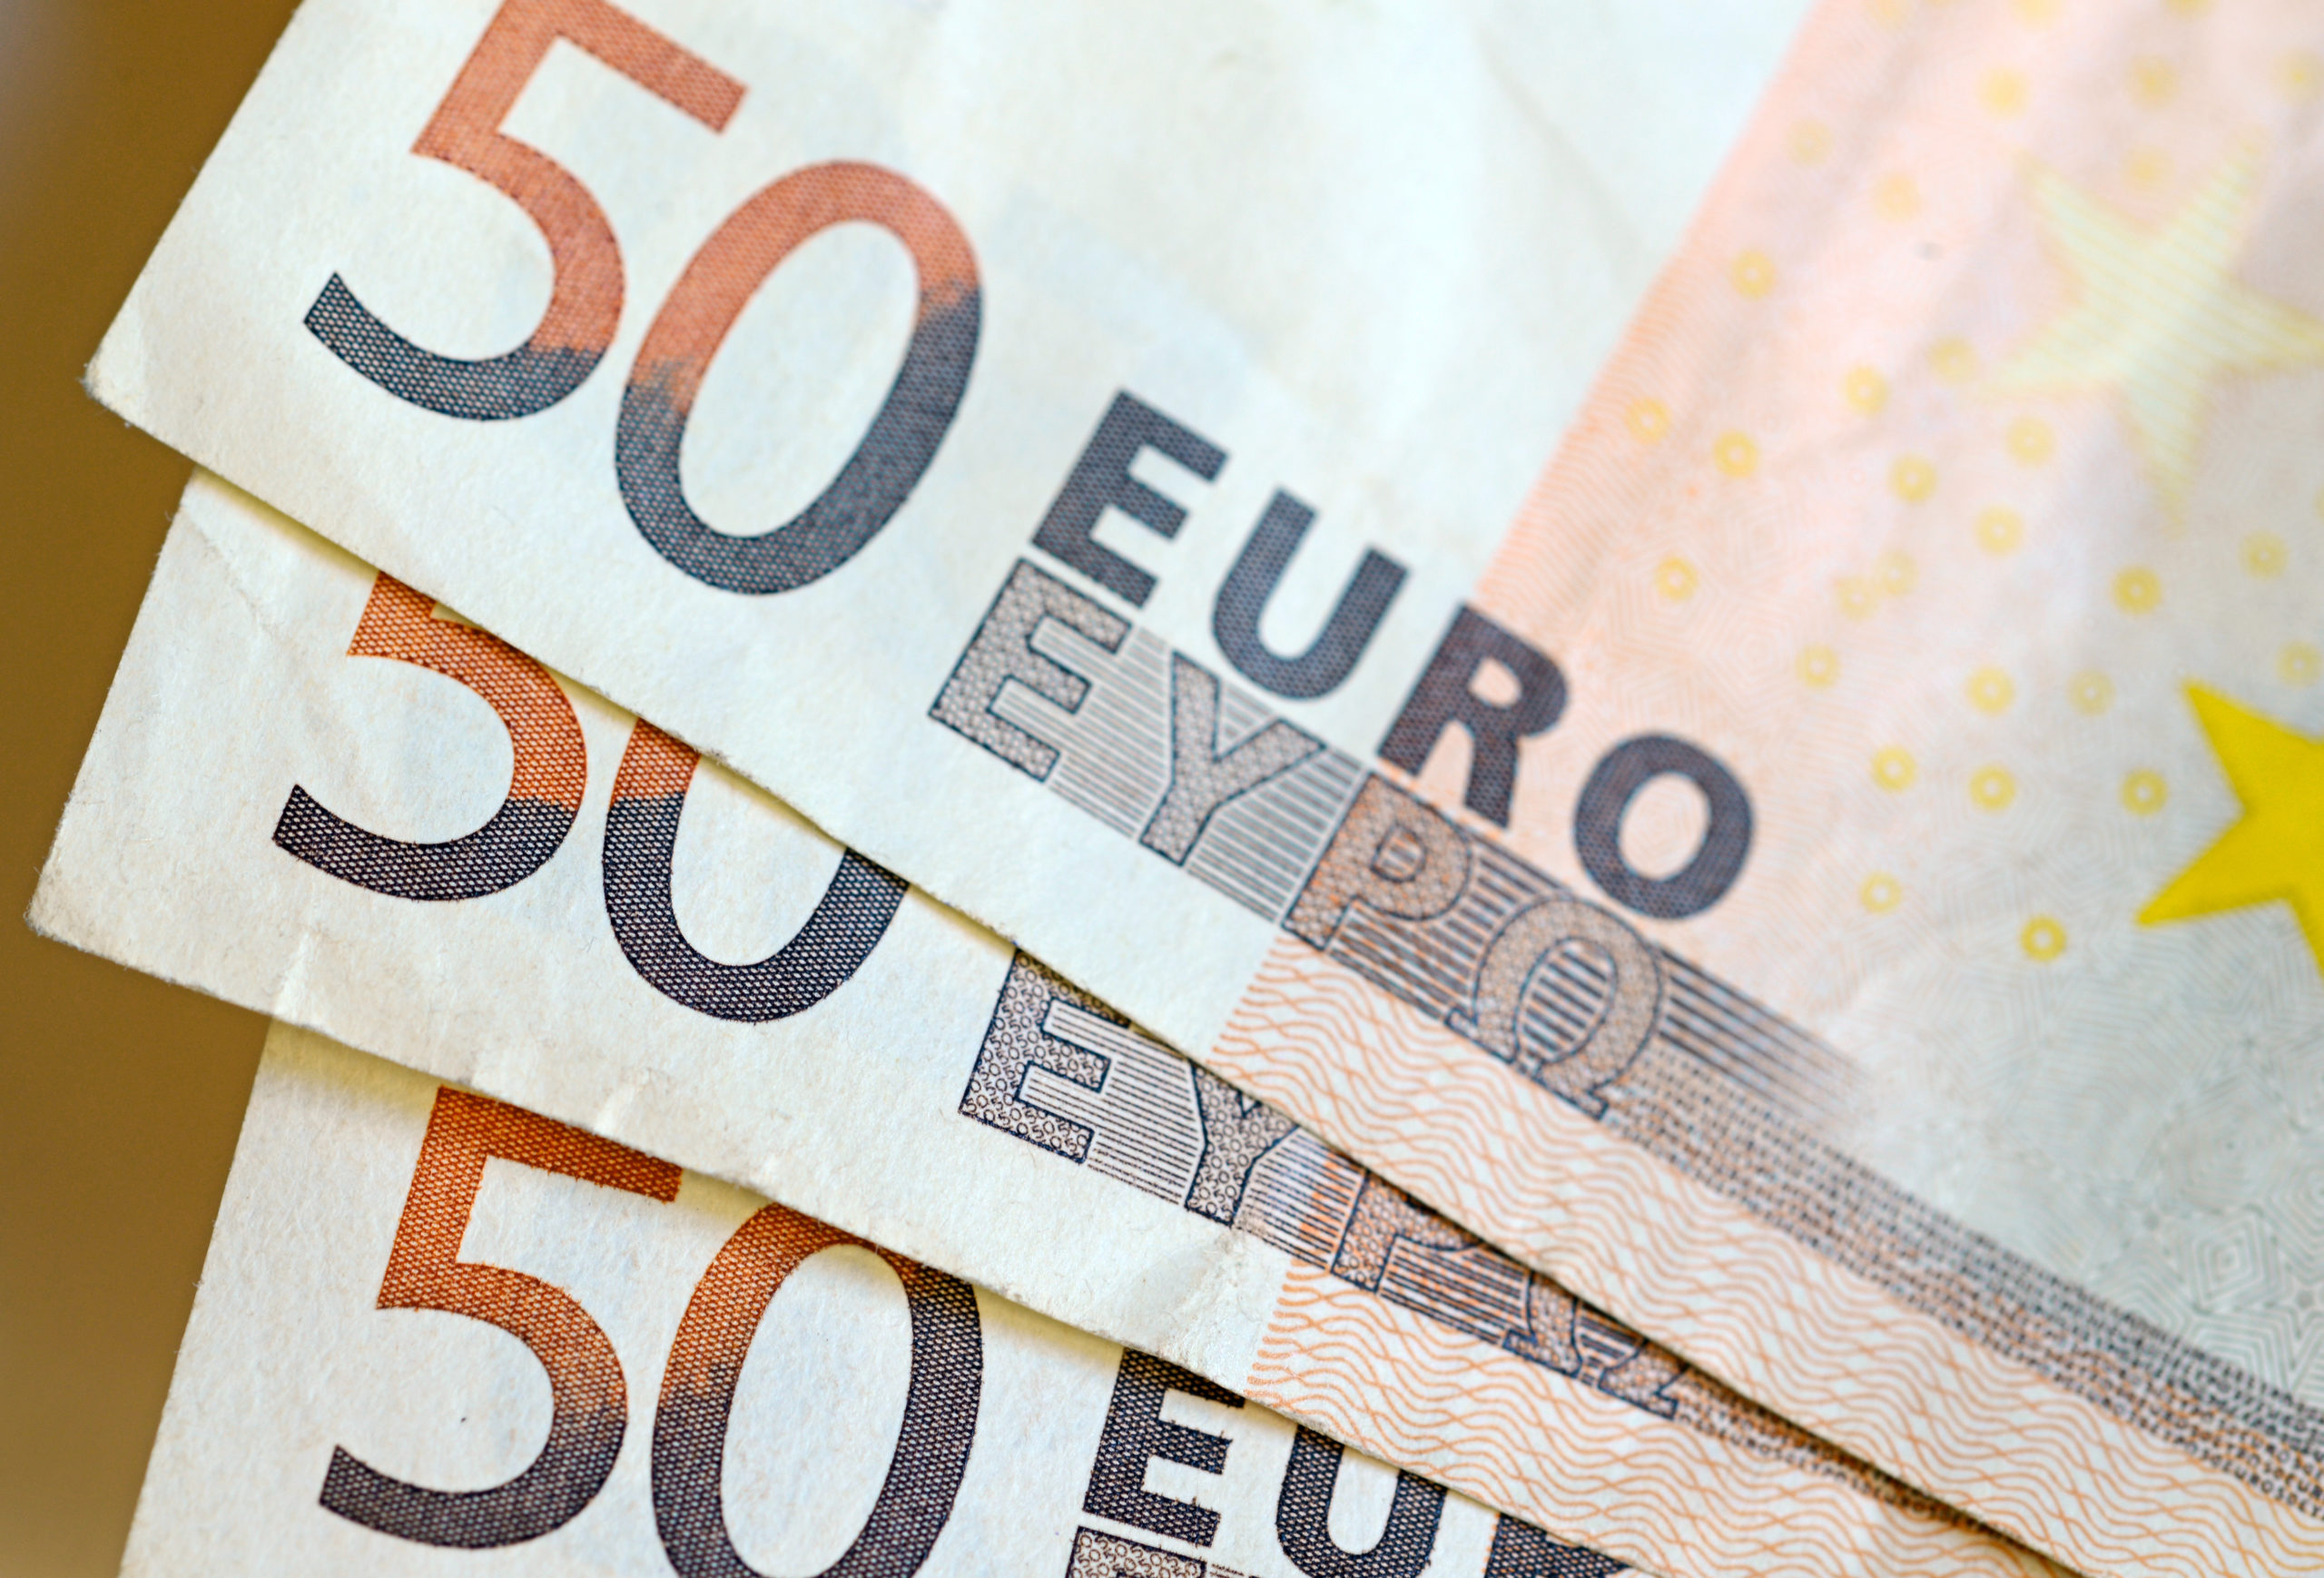 EURUSD defends 1.18 ahead of ECB decision